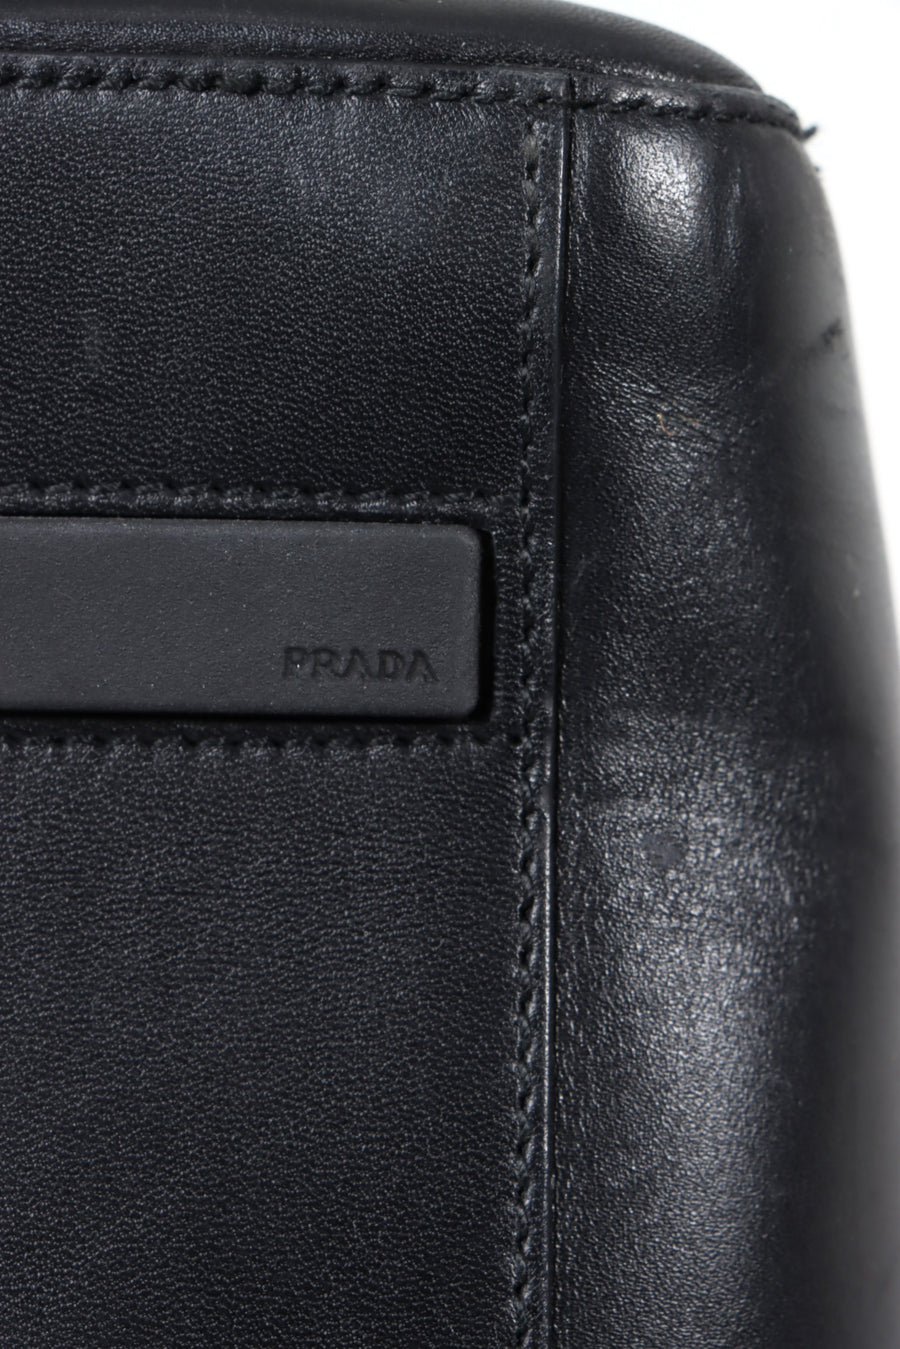 PRADA 'Vitello City' Black Leather Tote Bag Italy Made